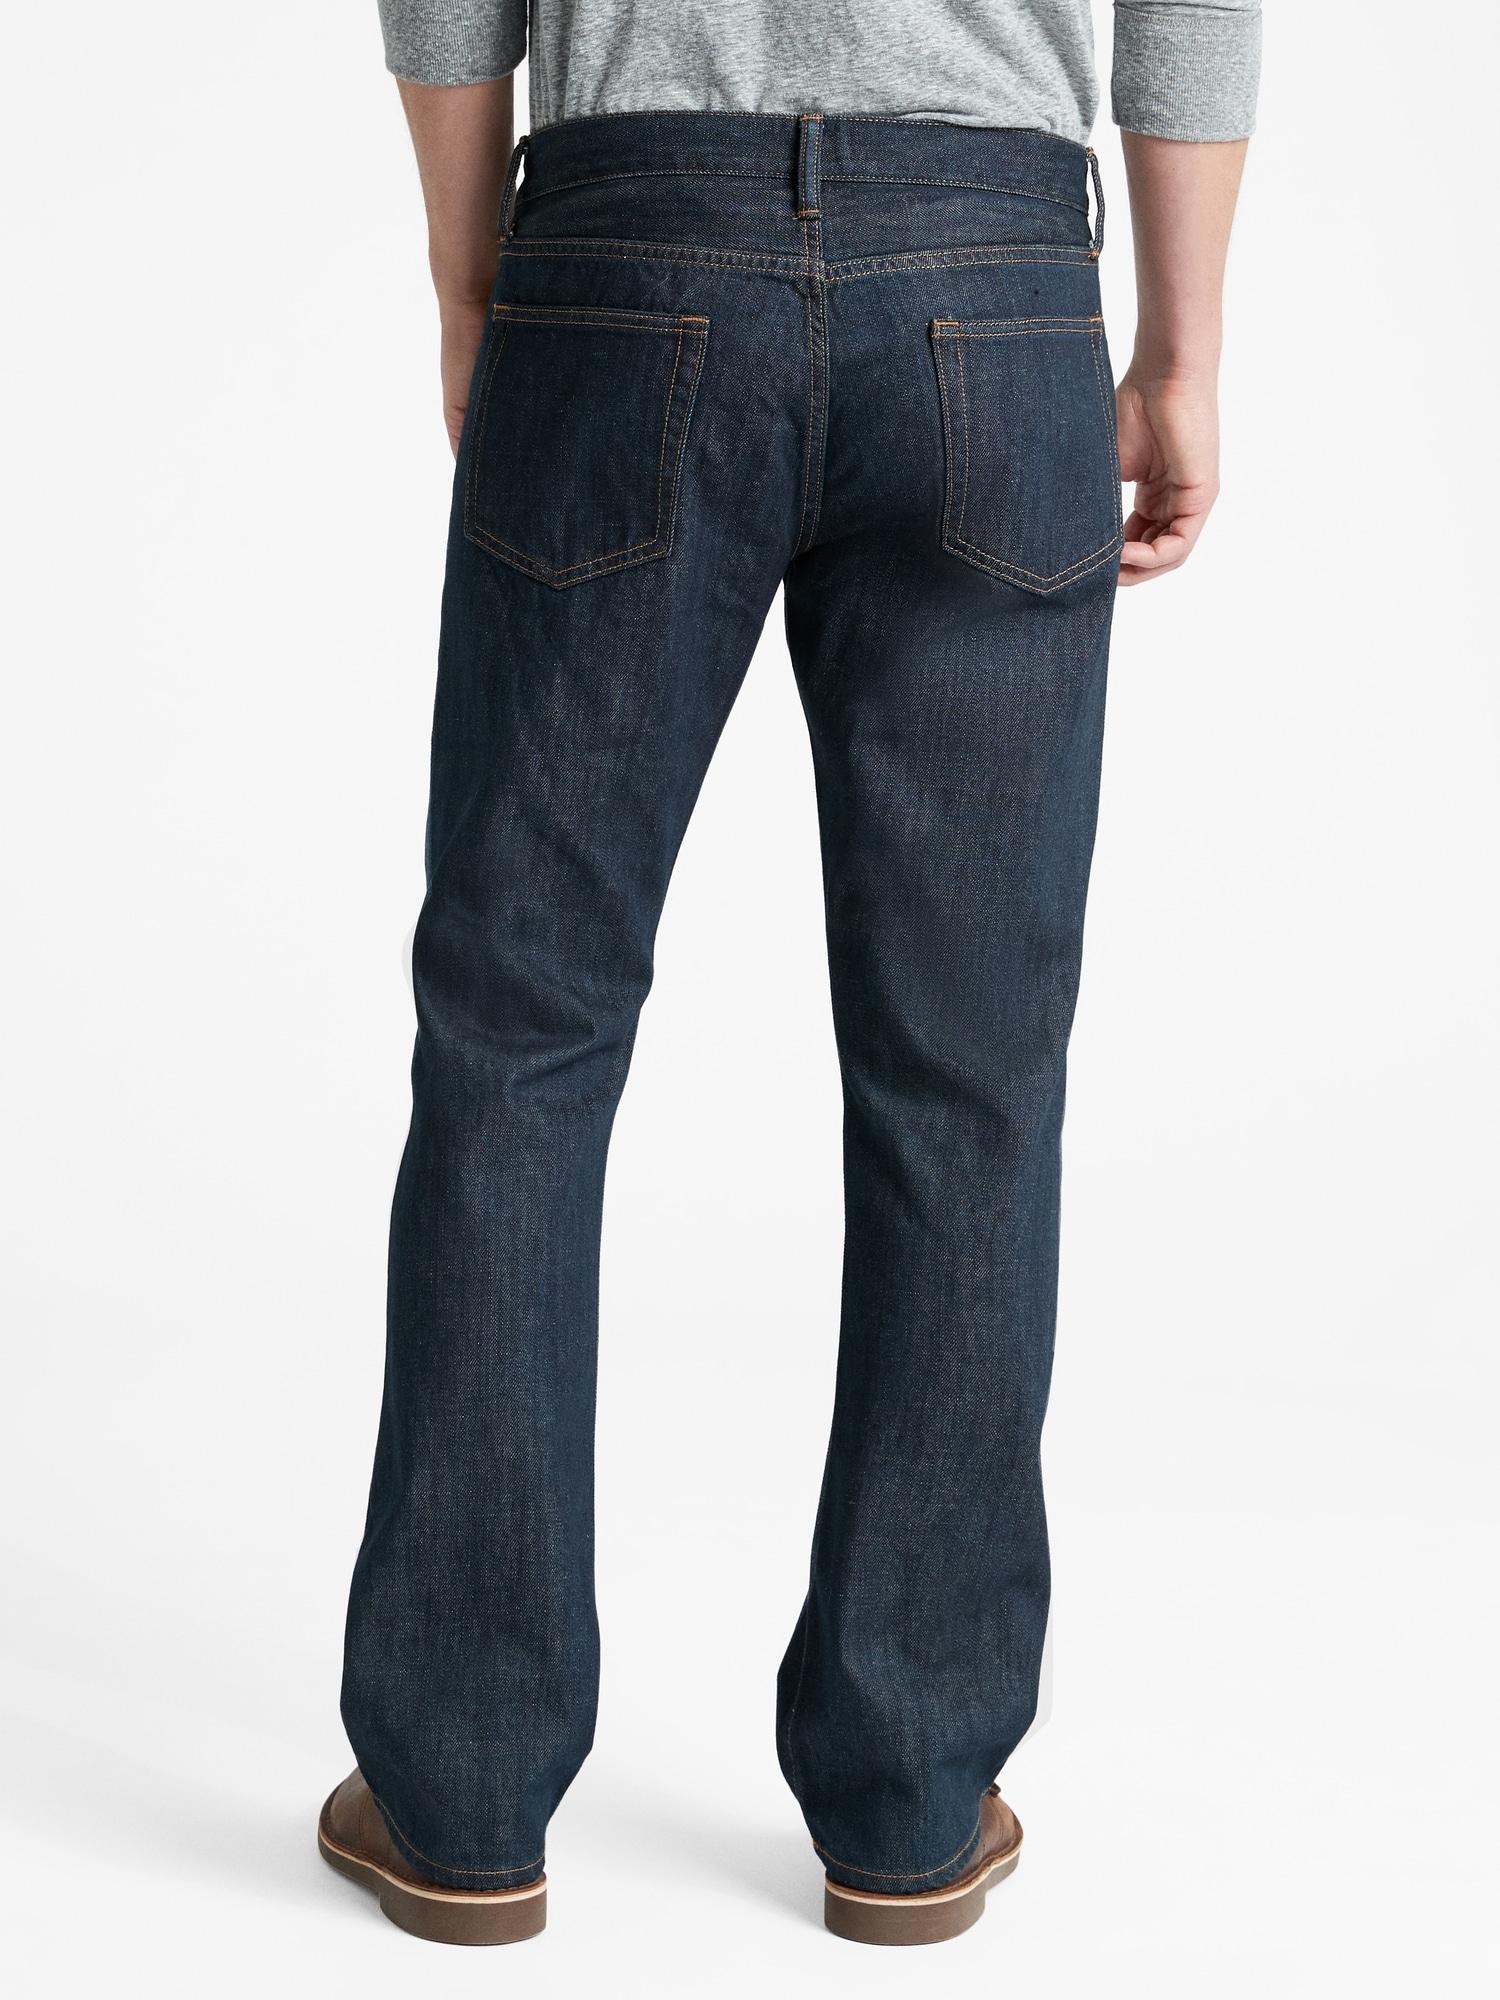 GAP Factory Denim Boot Jeans in Dark Rinse (Blue) for Men - Lyst